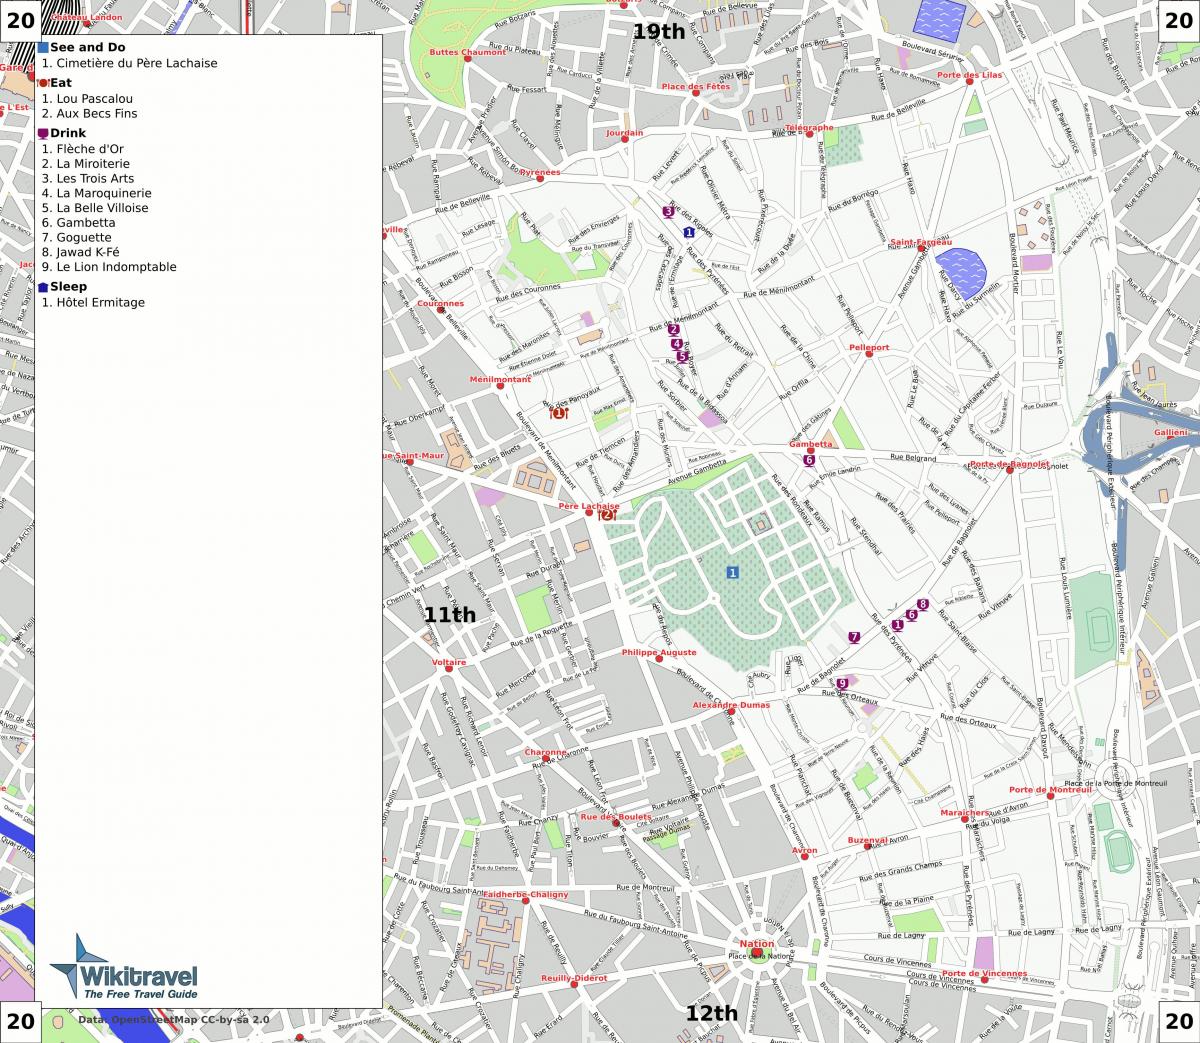 Peta ke-20 arrondissement Paris